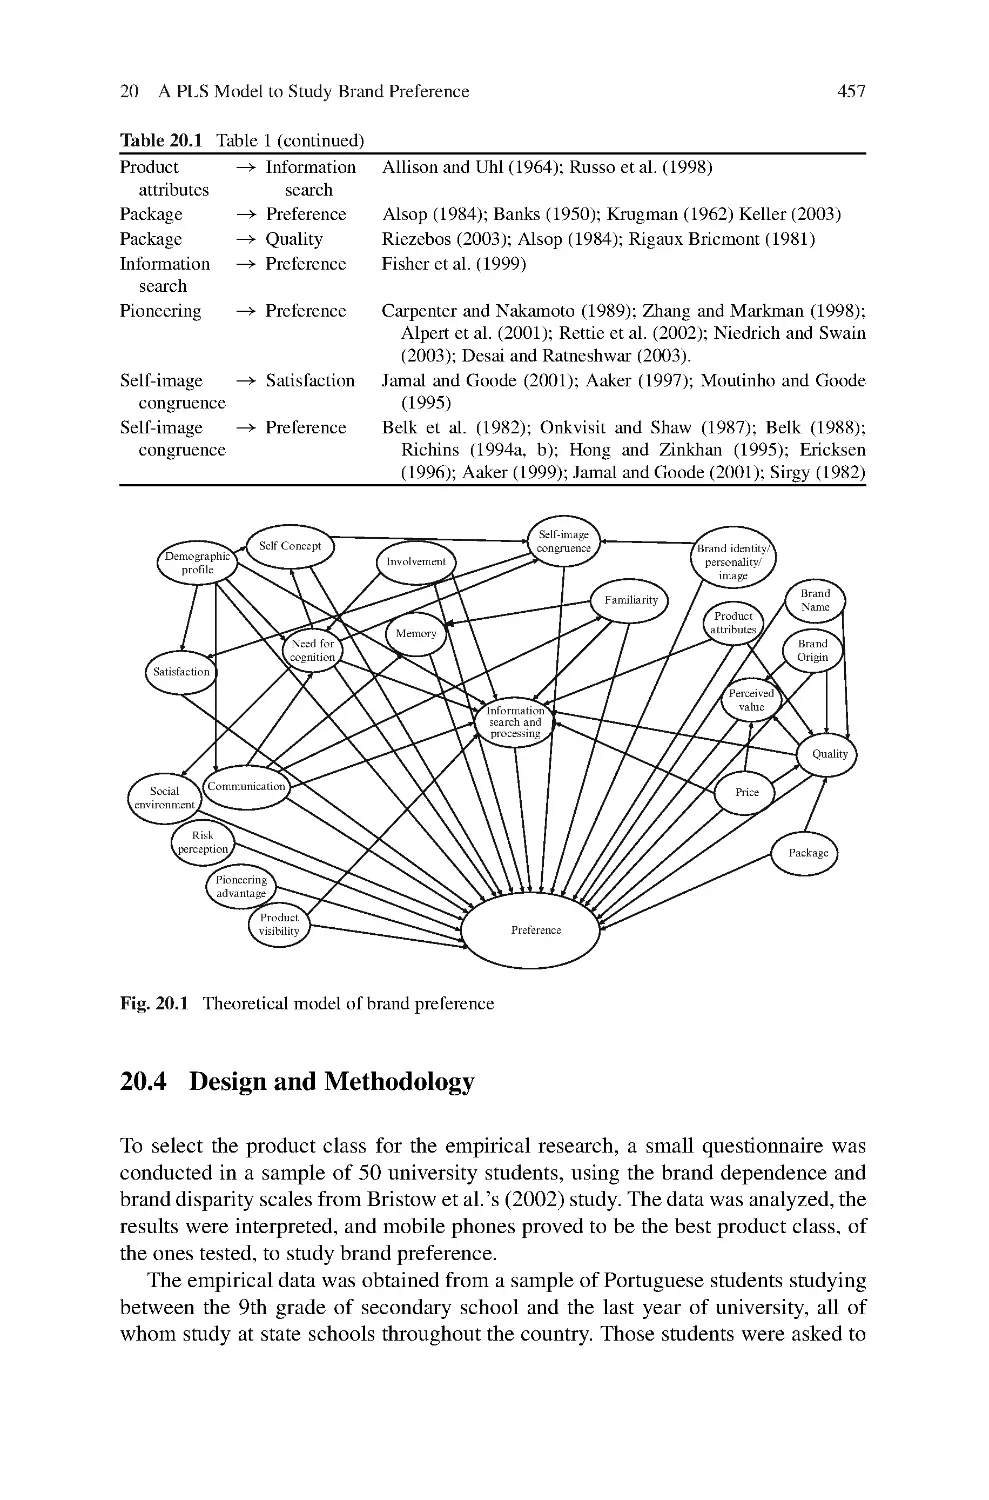 20.4 Design and Methodology